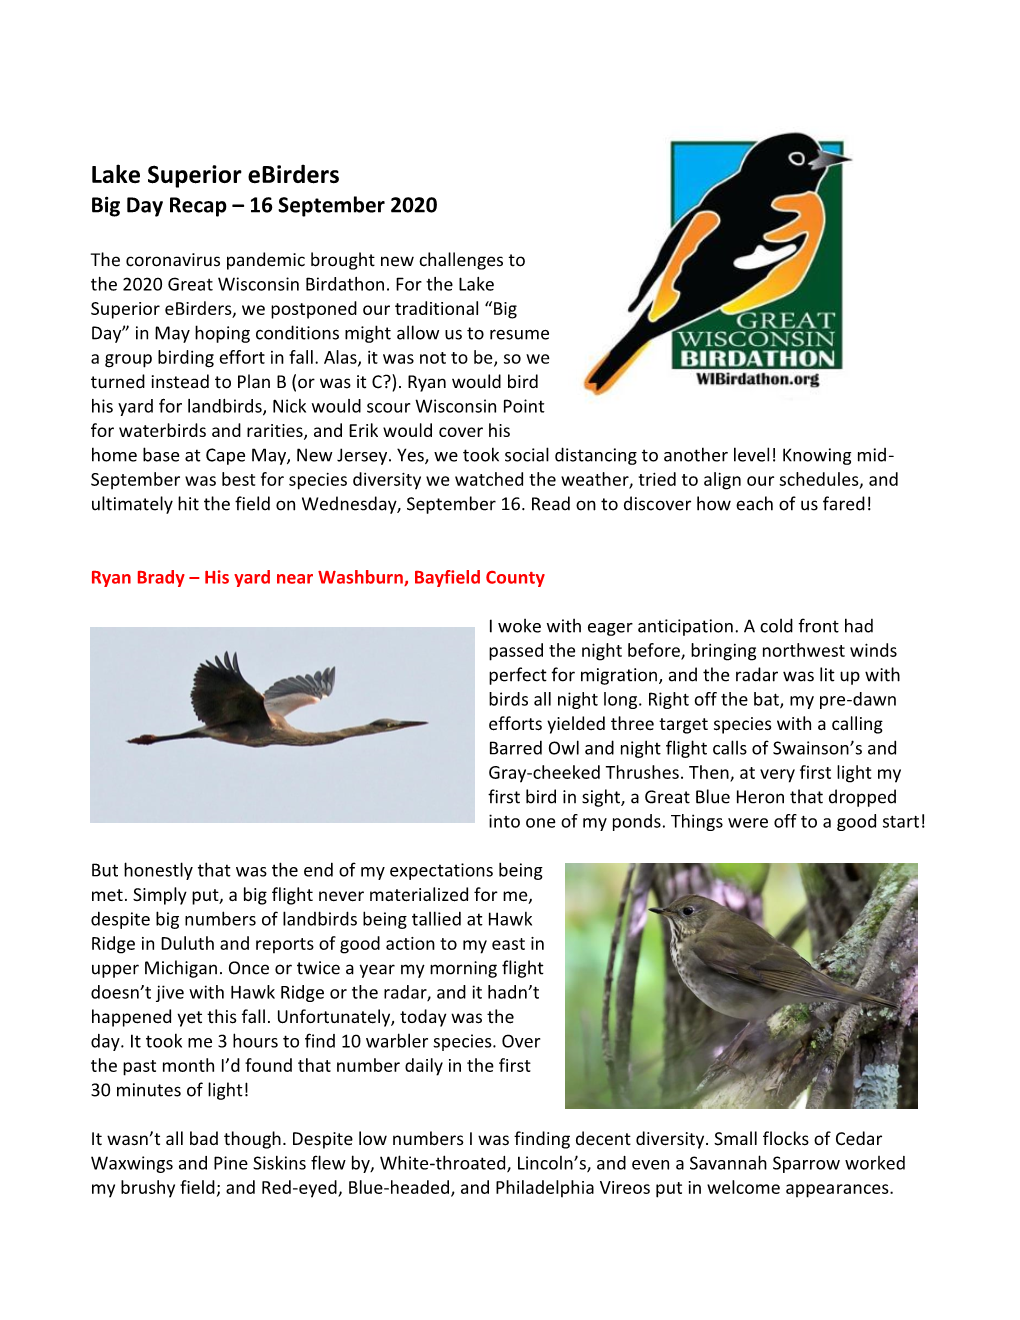 Lake Superior Ebirders Big Day Recap – 16 September 2020